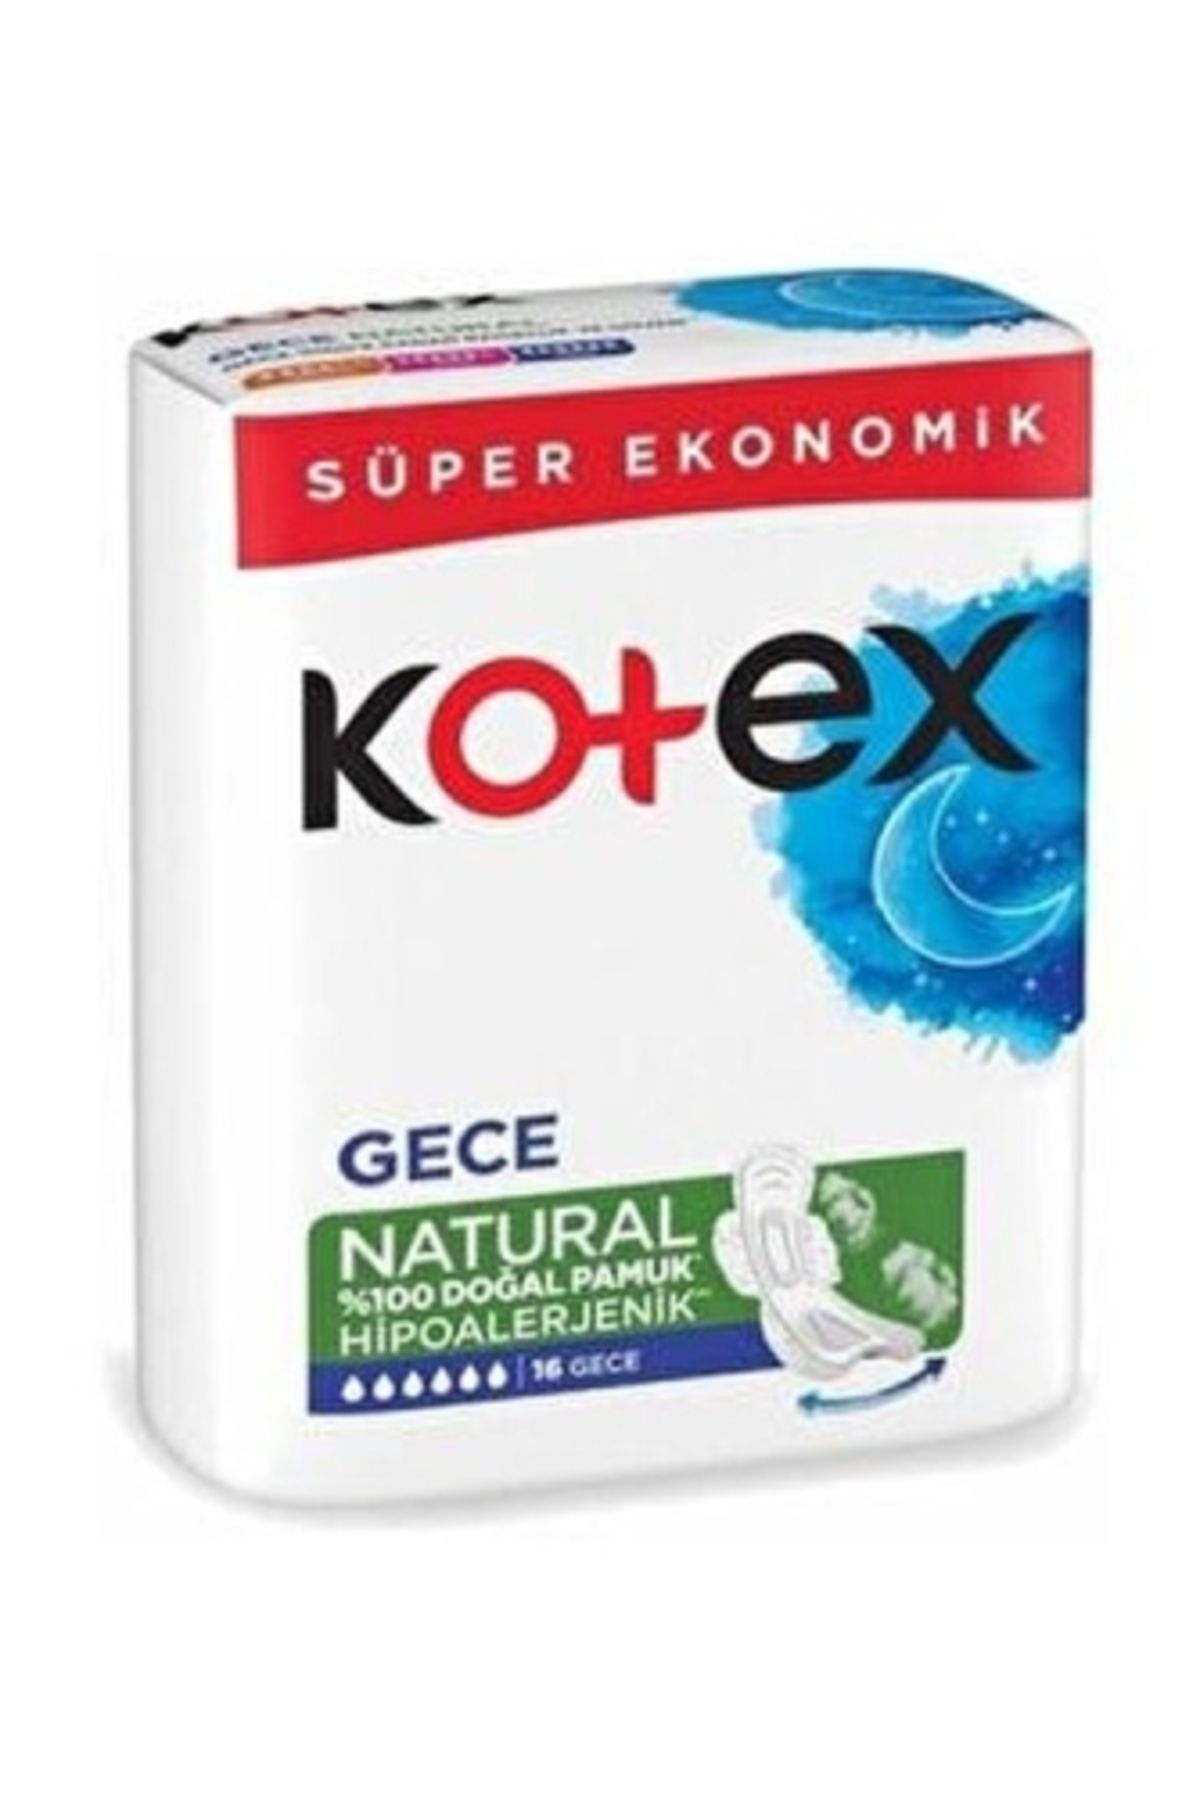 Kotex Natural Ekonomik Gece 16'lı ( 1 ADET )